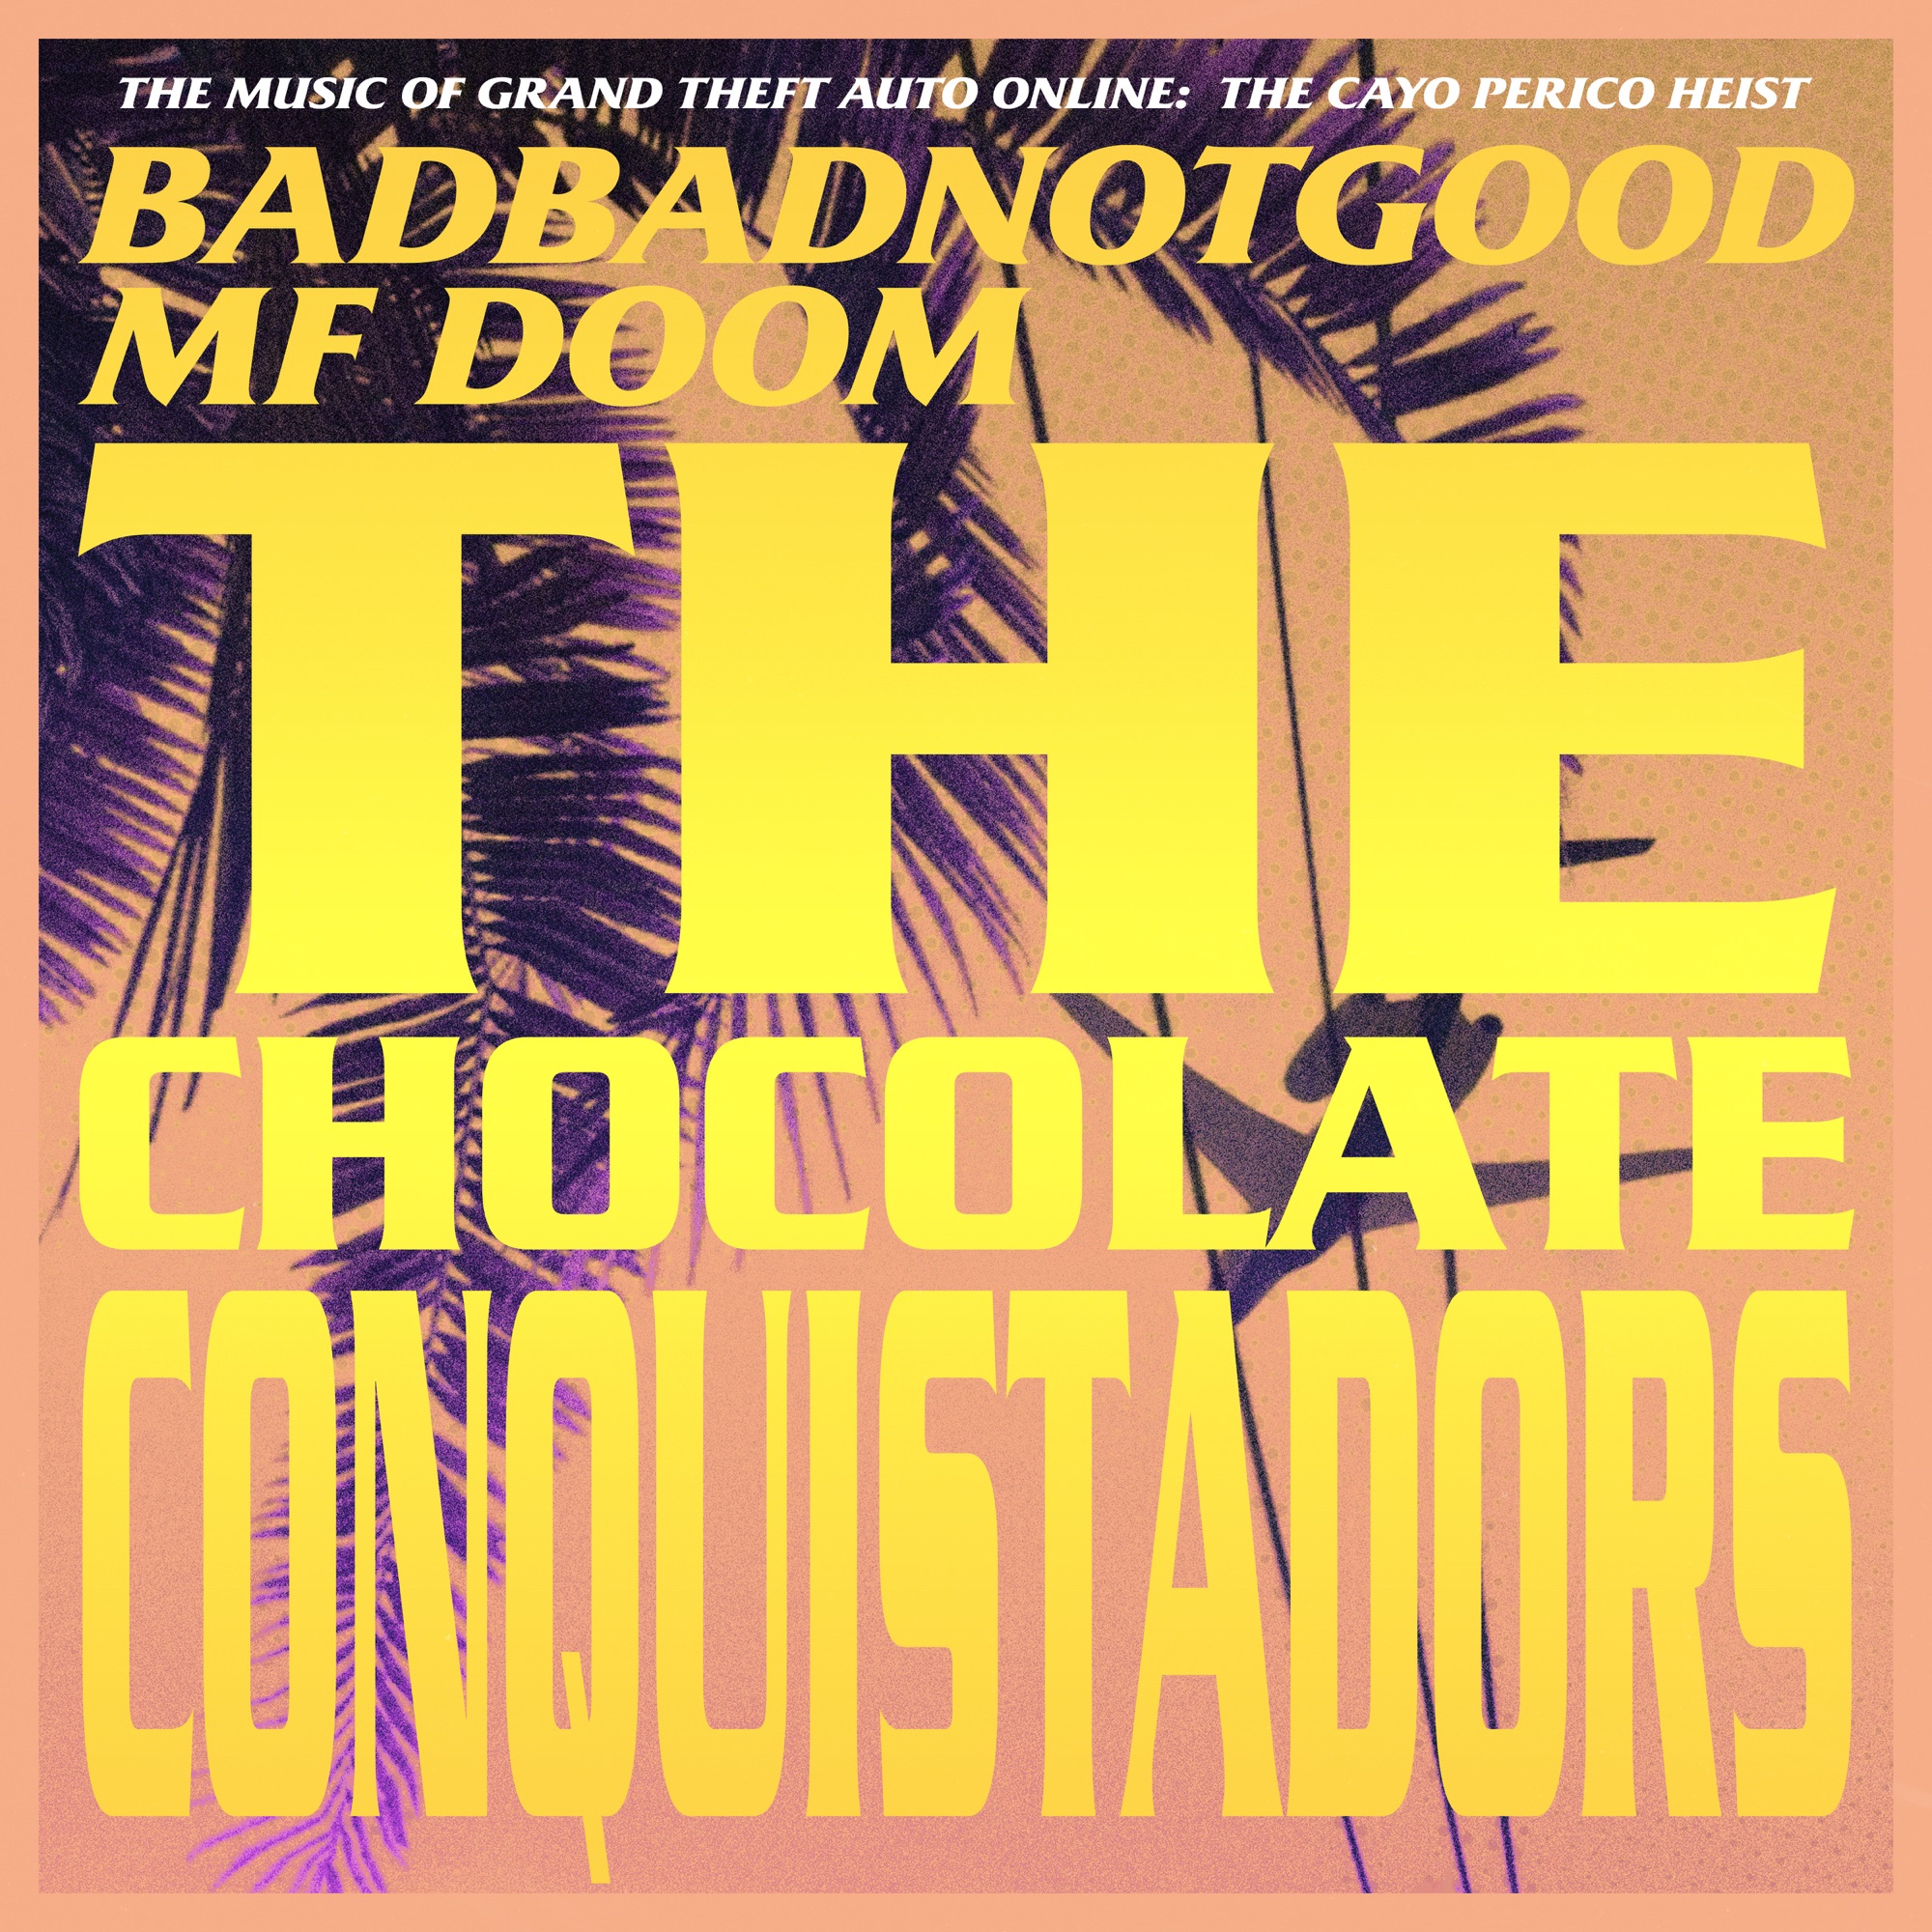 BADBADNOTGOOD & MF DOOM - The Chocolate Conquistadors (From Grand Theft Auto Online: The Cayo Perico Heist) - Single